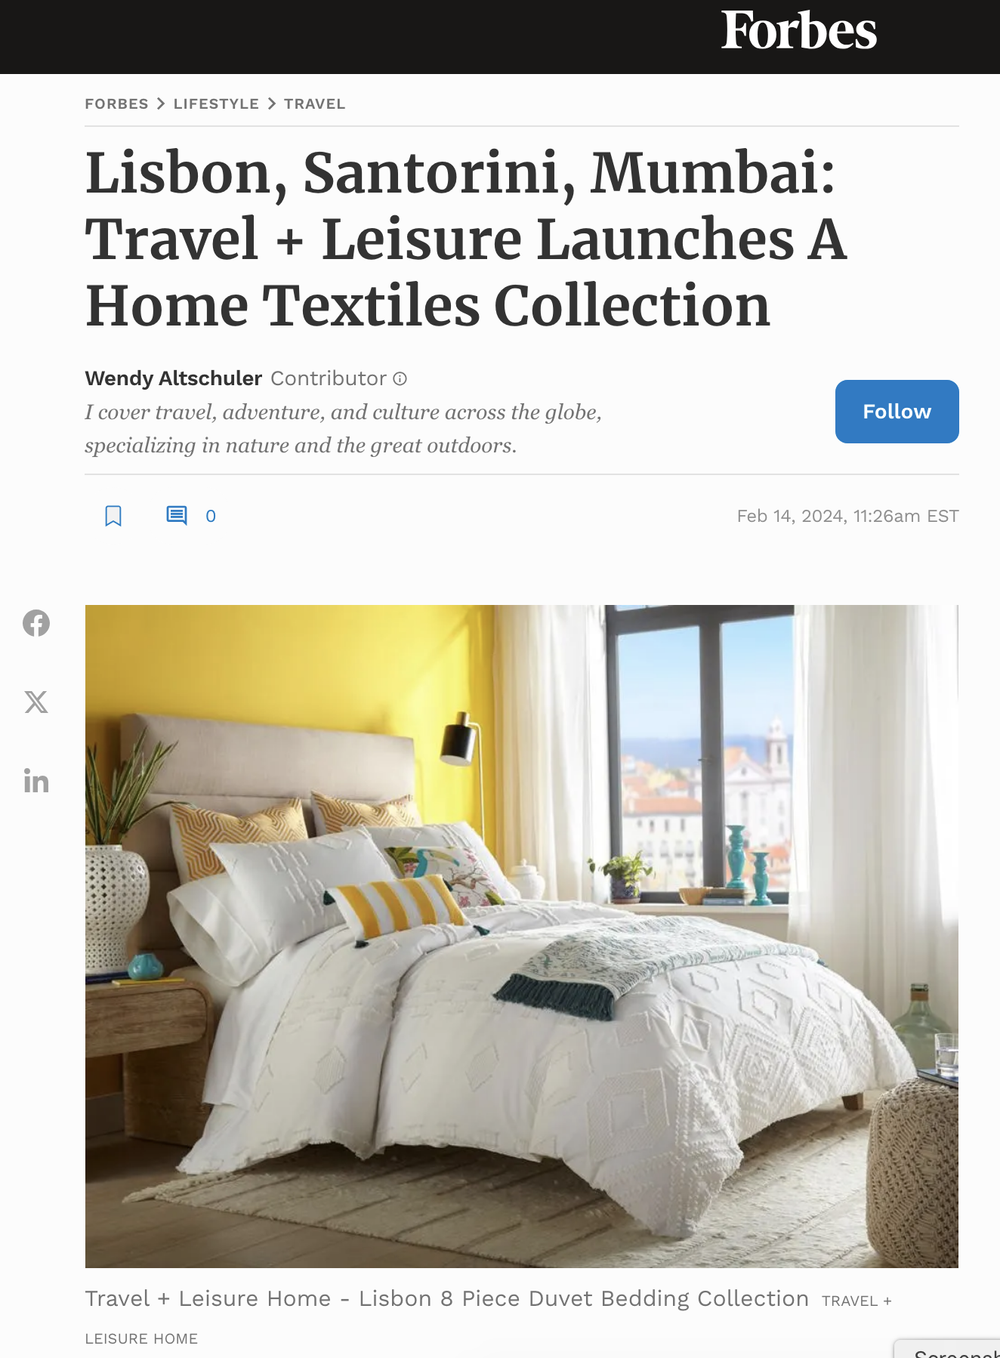 Lisbon, Santorini, Mumbai: Travel + Leisure Launches A Home Textiles Collection